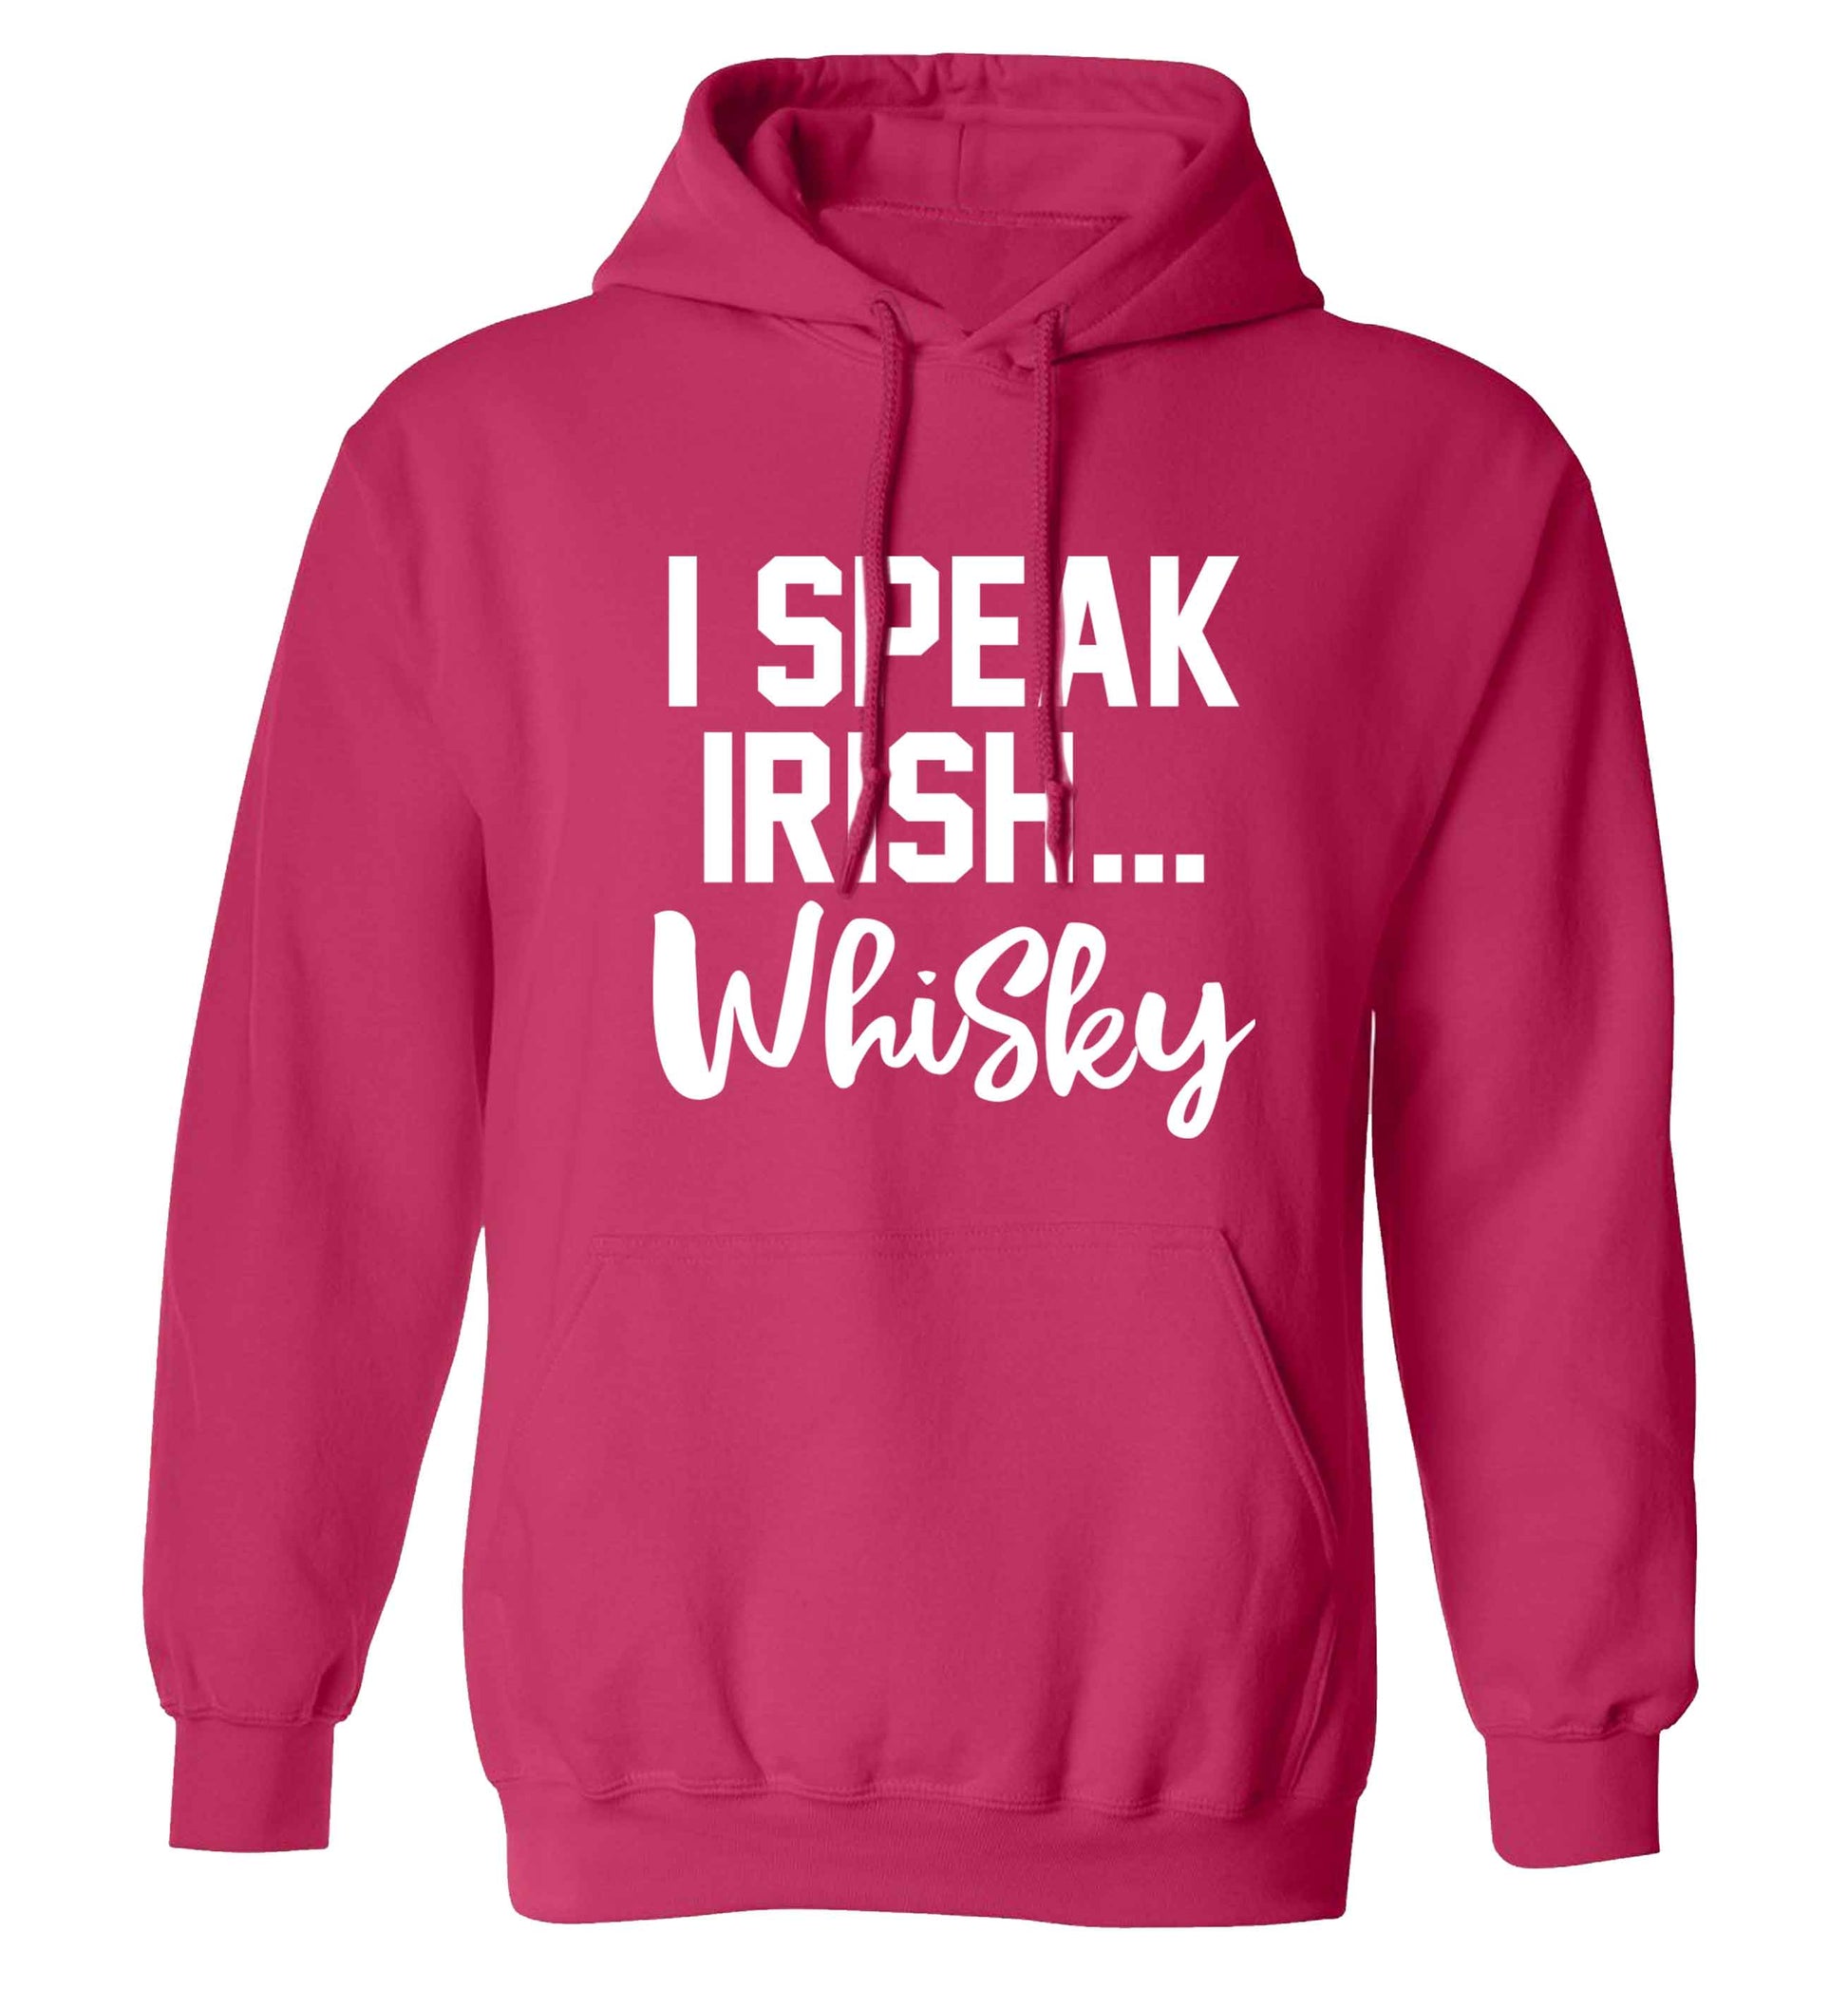 I speak Irish whisky adults unisex pink hoodie 2XL